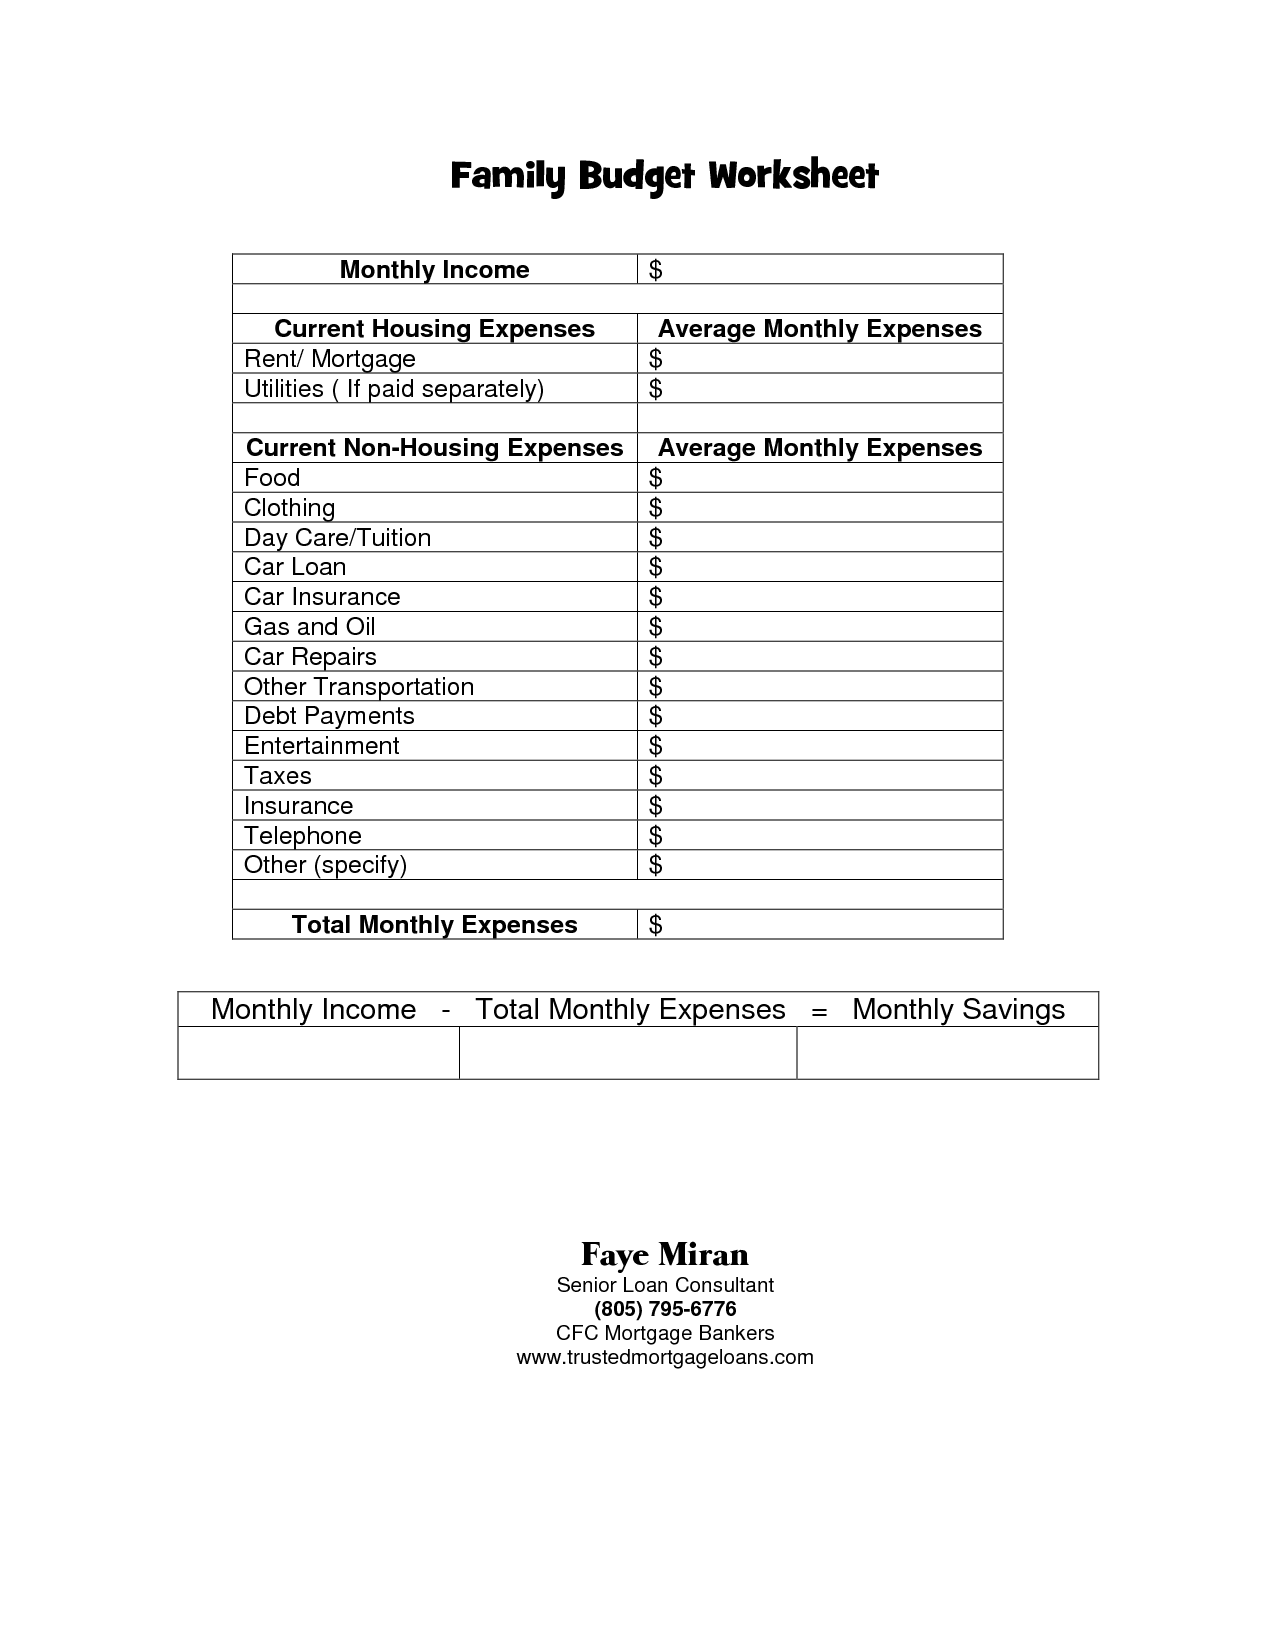 Family Budget Worksheet PDF